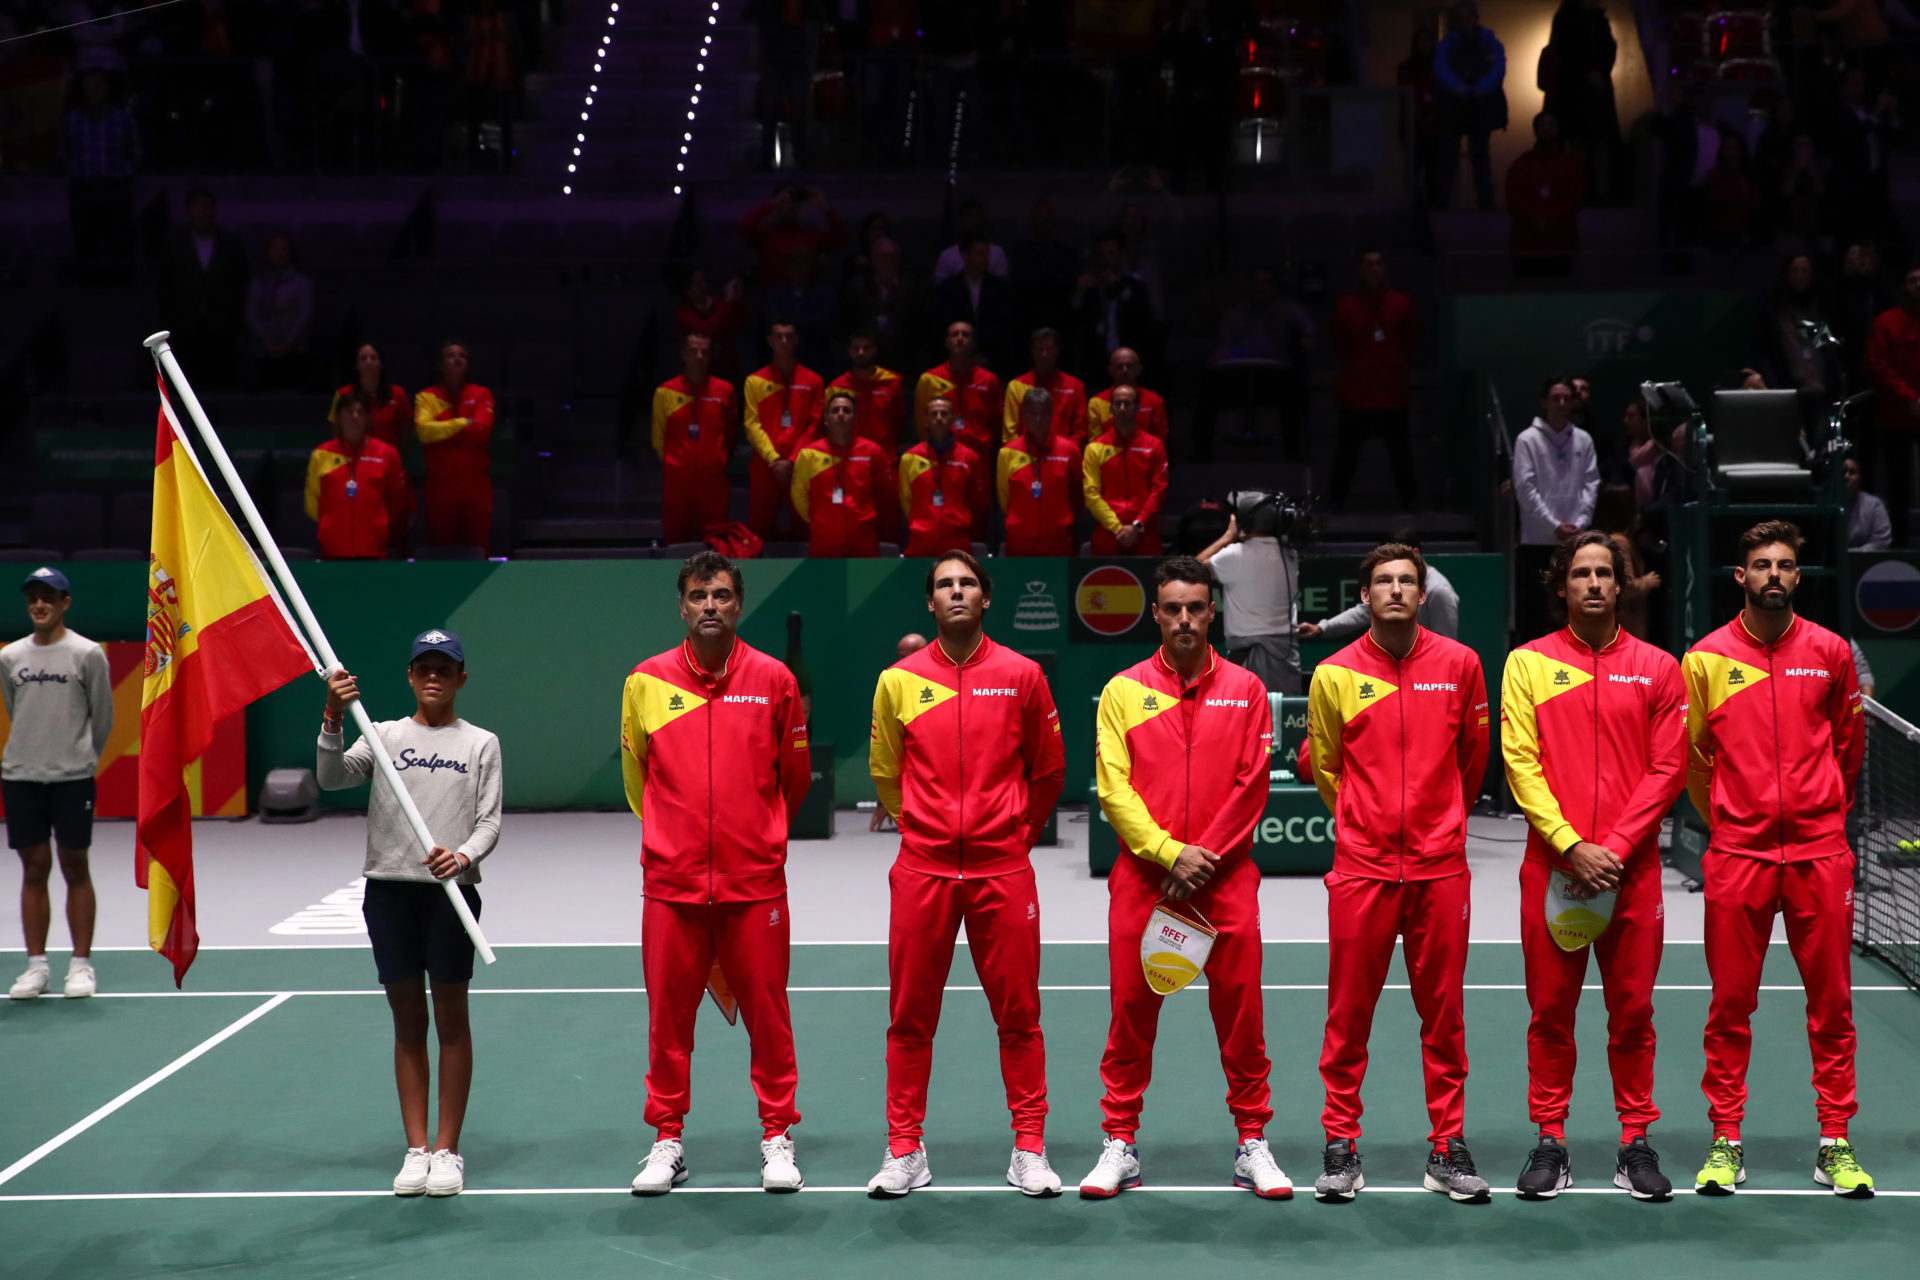 Roberto Bautista Agut, Rafael Nadal et l'équipe espagnole de Coupe Davis